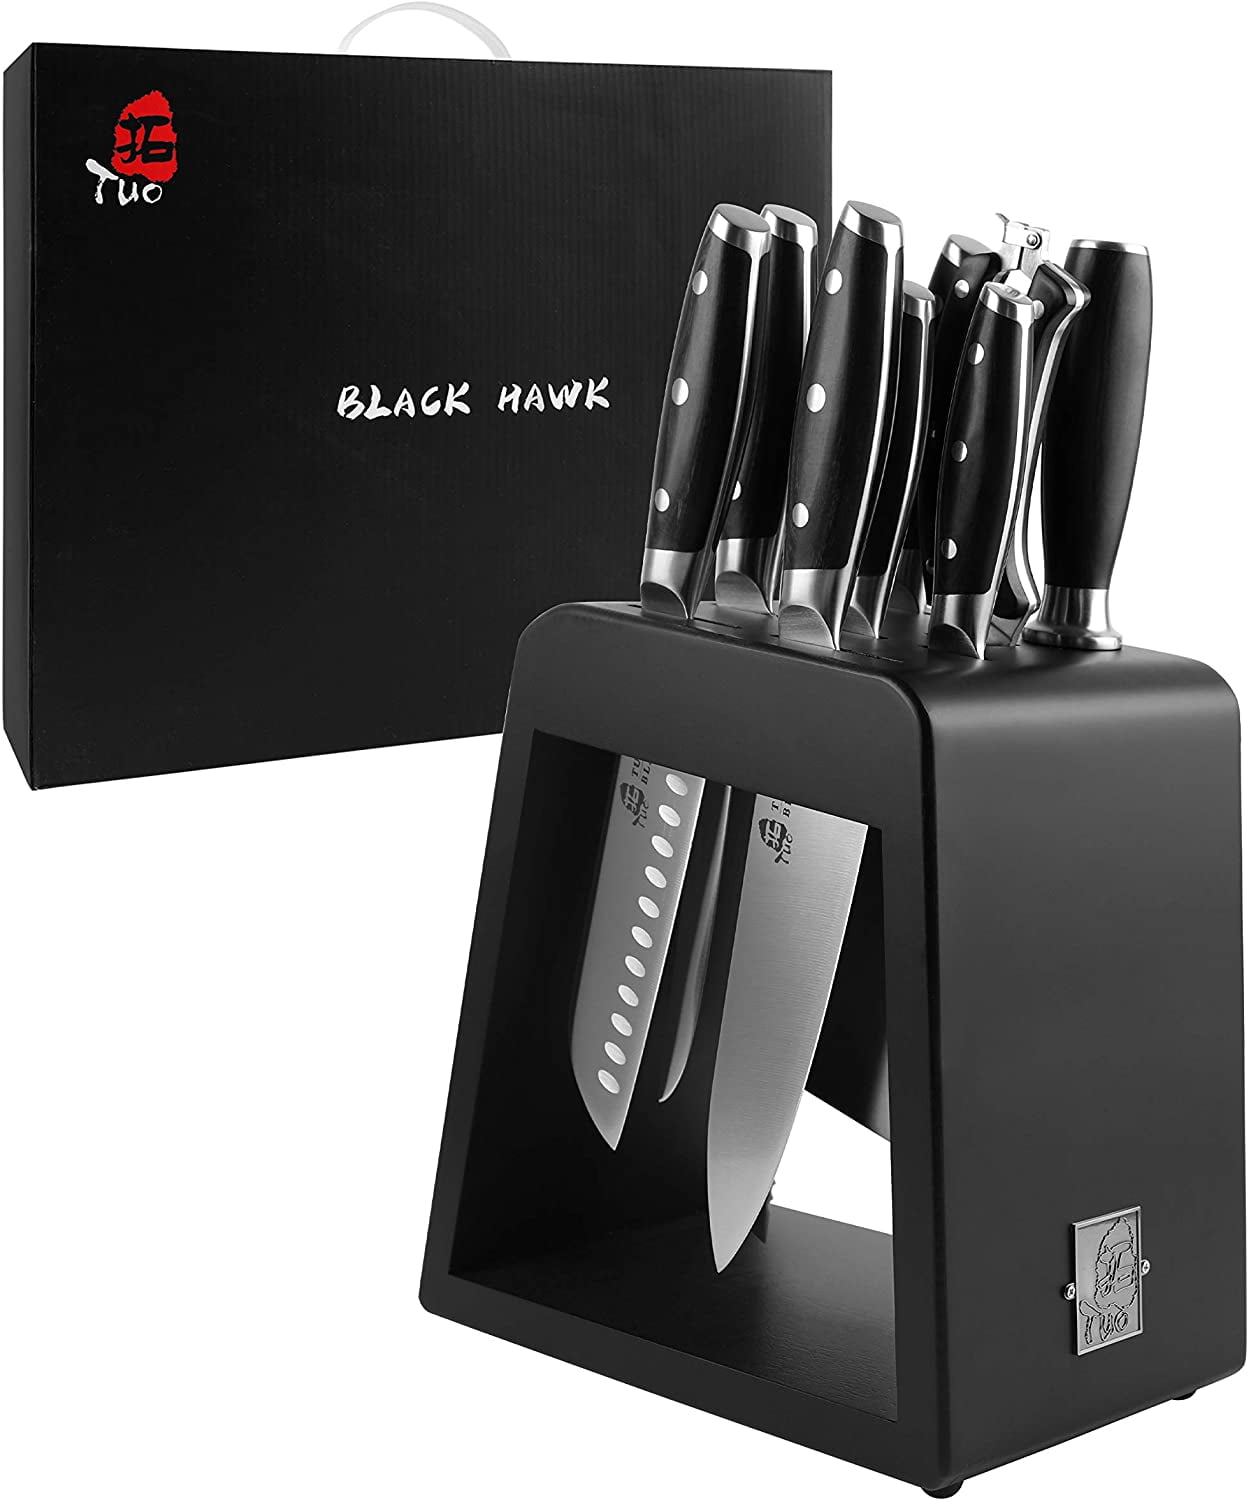 Knife Block Clear, Black order online now